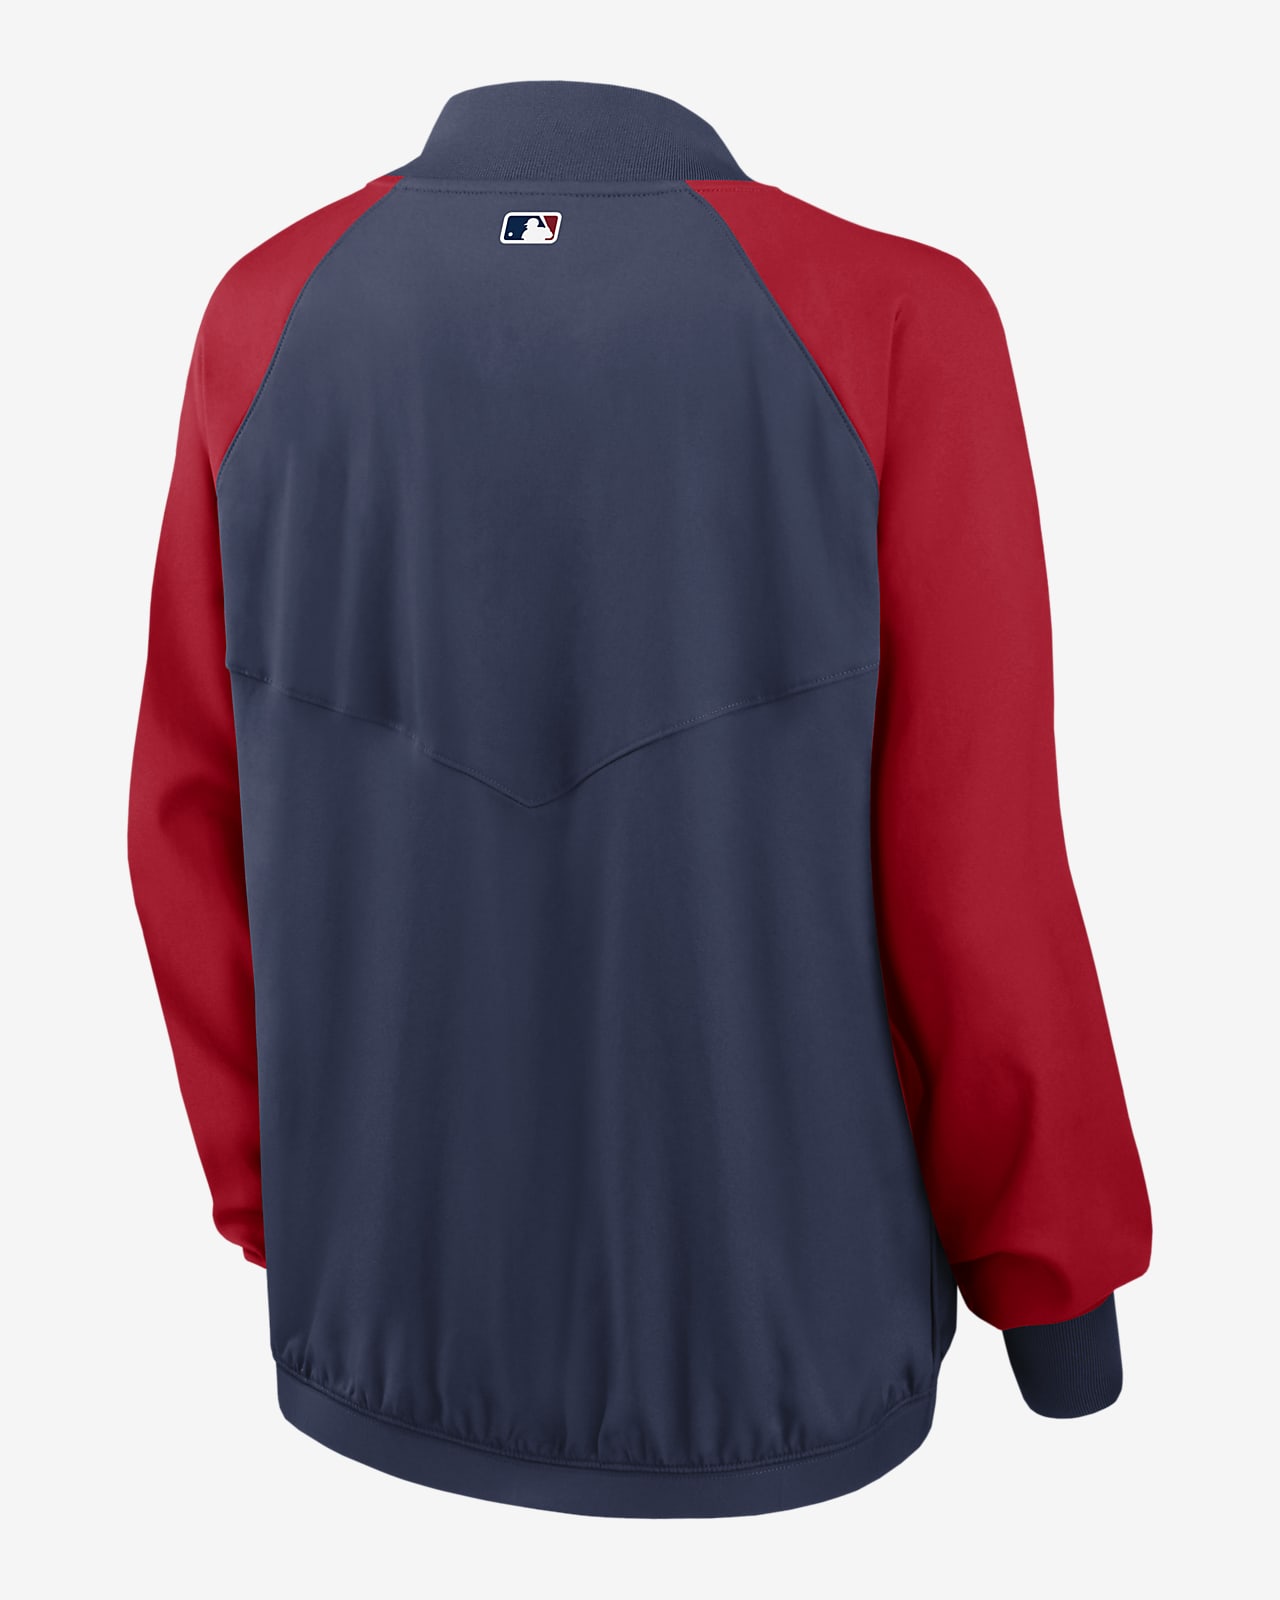 Nike Dri-FIT Team (MLB Atlanta Braves) Women's Full-Zip Jacket